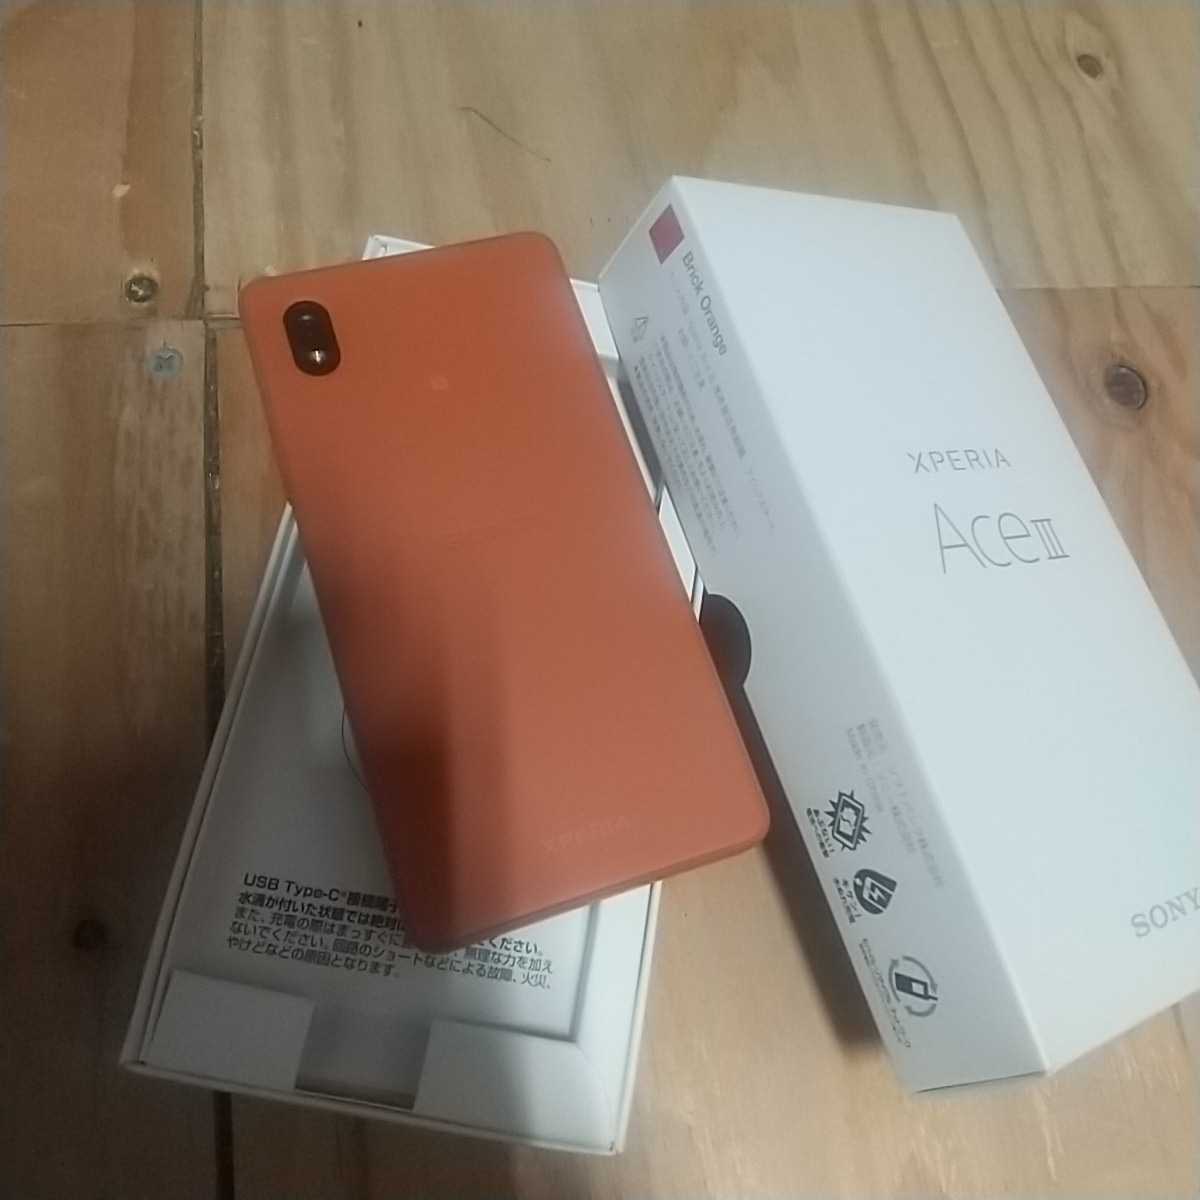 SONY Xperia Ace III 3 brick orange SIM Unlocked 5G Support 4GB 64GB Japan New